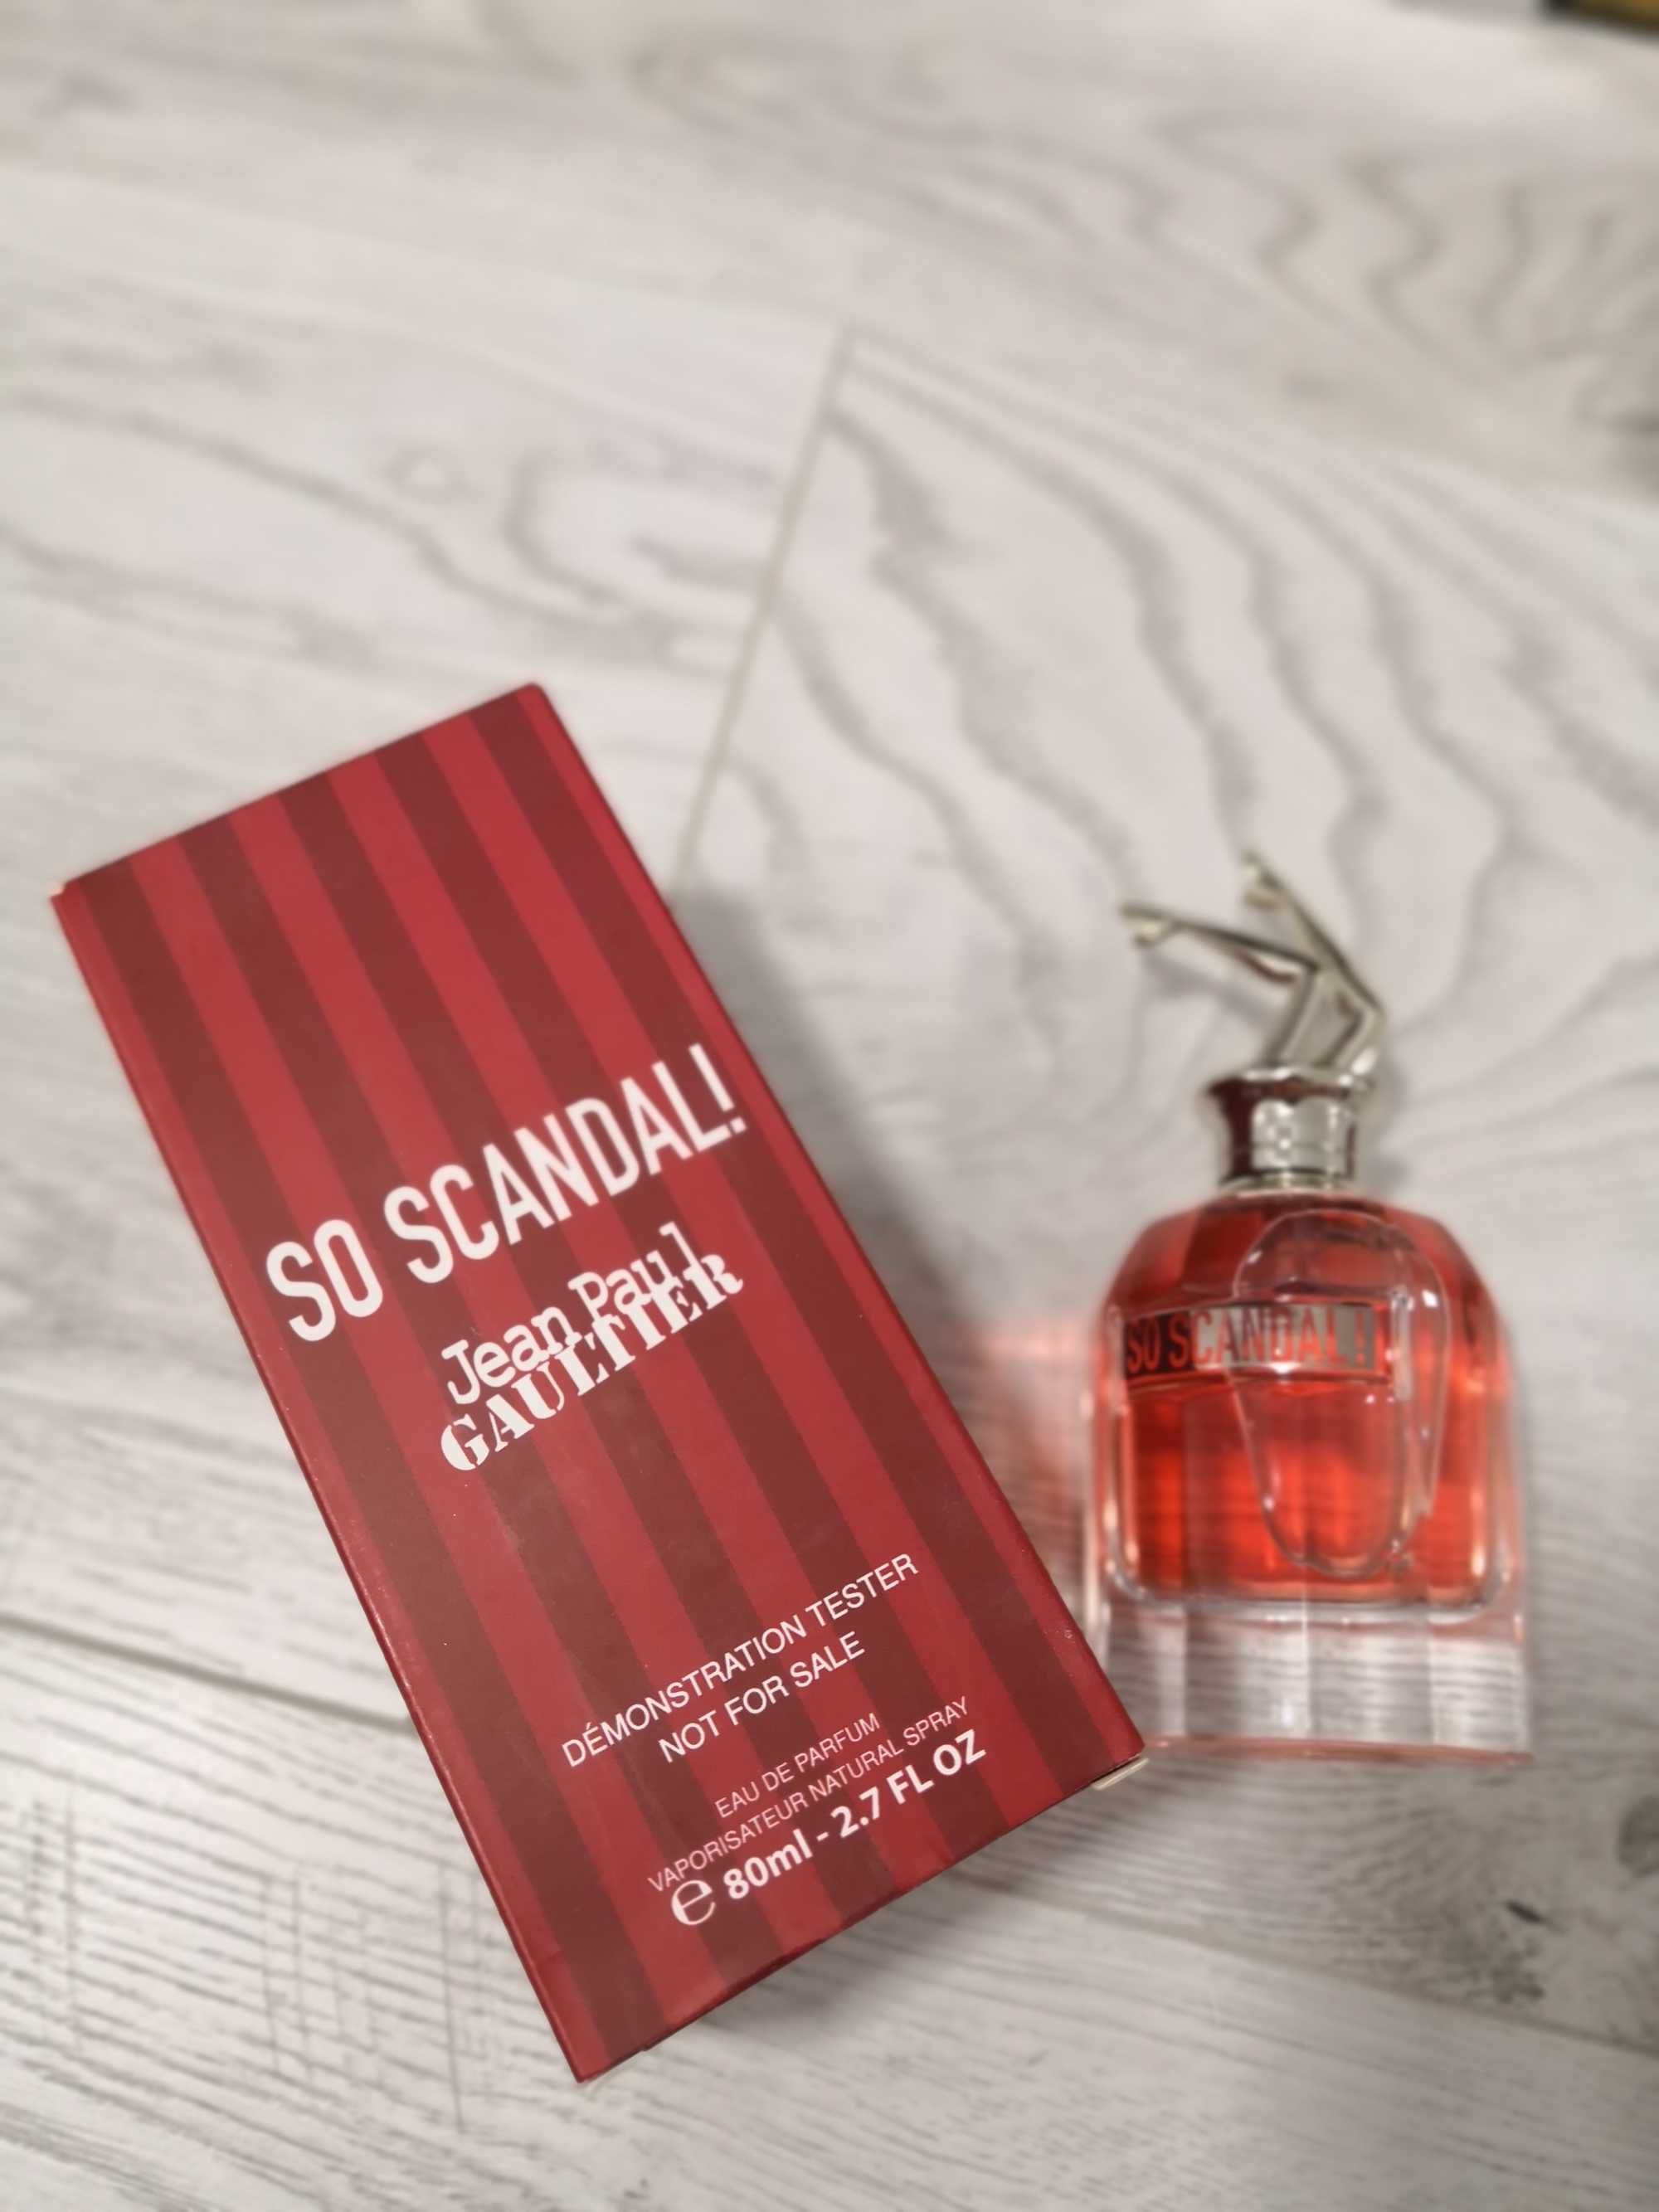 Parfum So Scandal